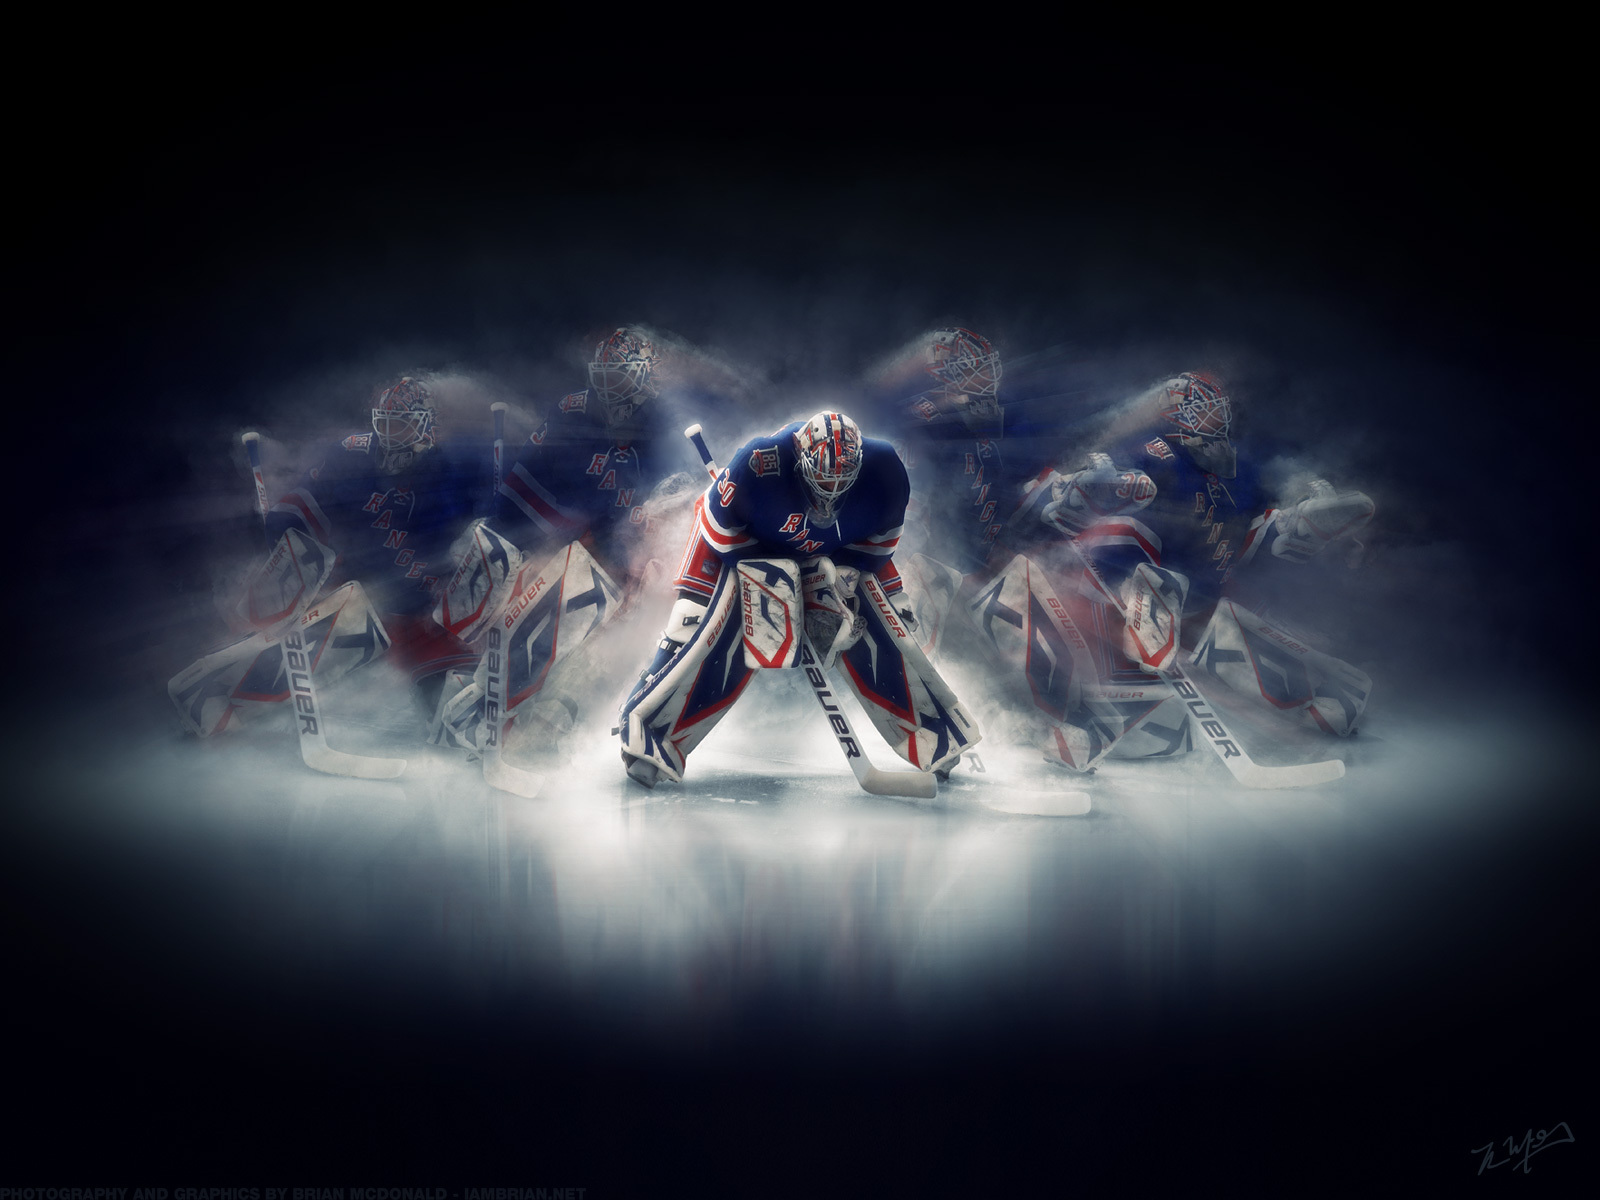 Best Hockey Player Henrik Lundqvist Wallpaper And Image